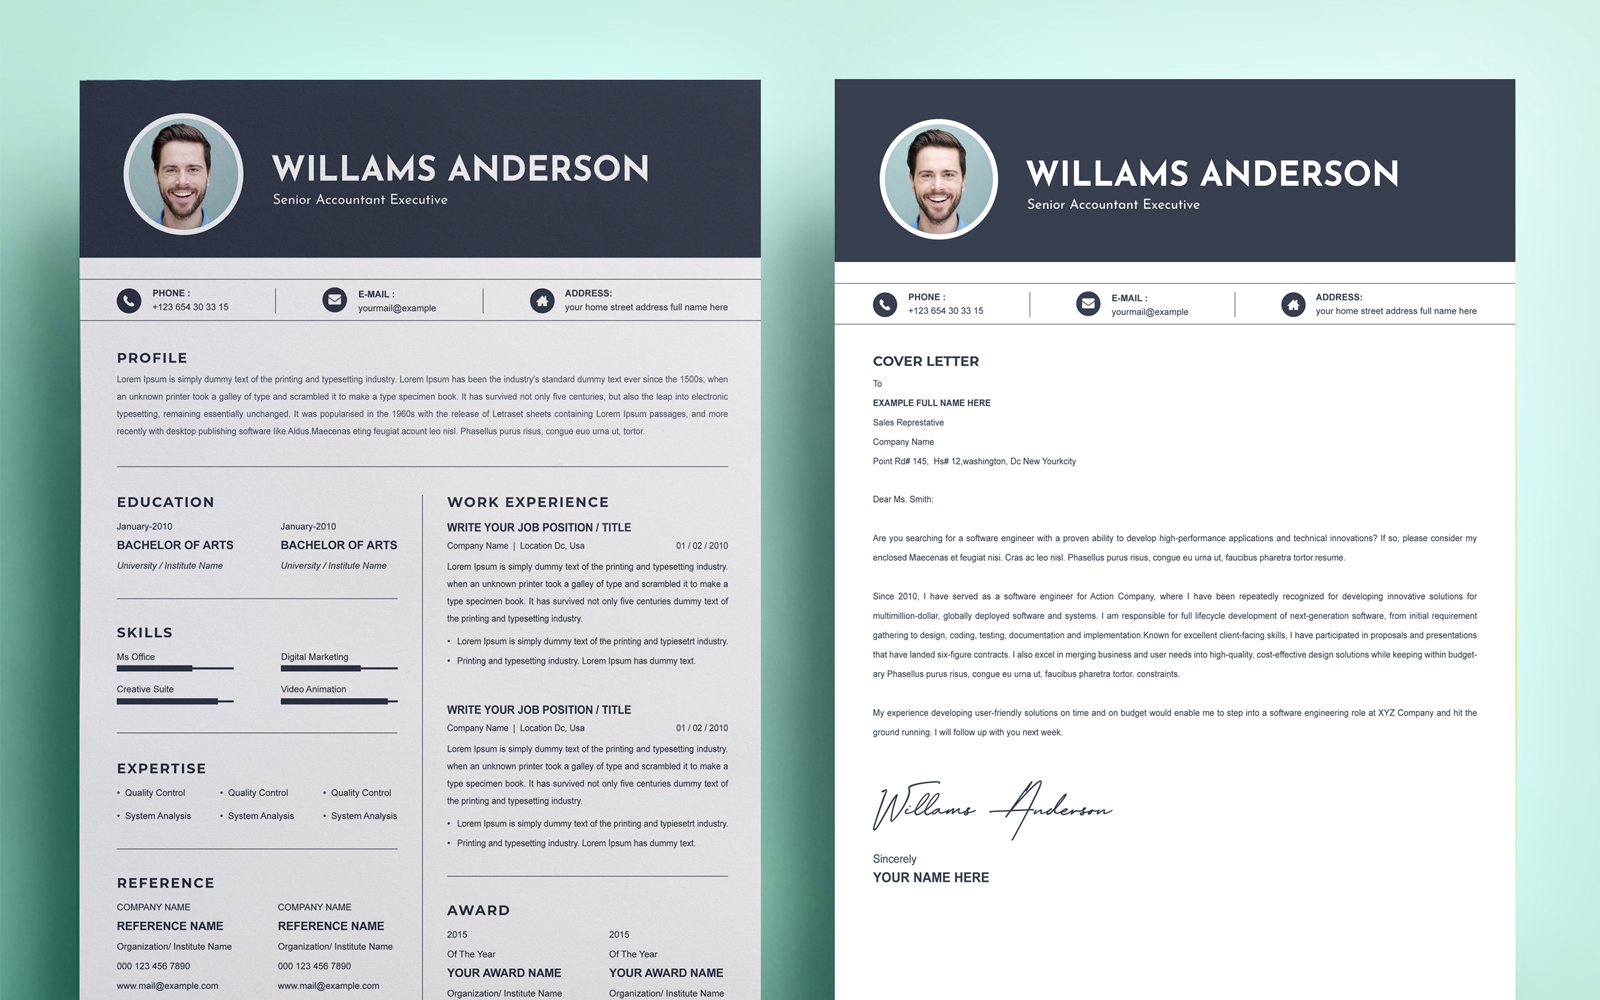 Williams Anderson - Resume Template Design